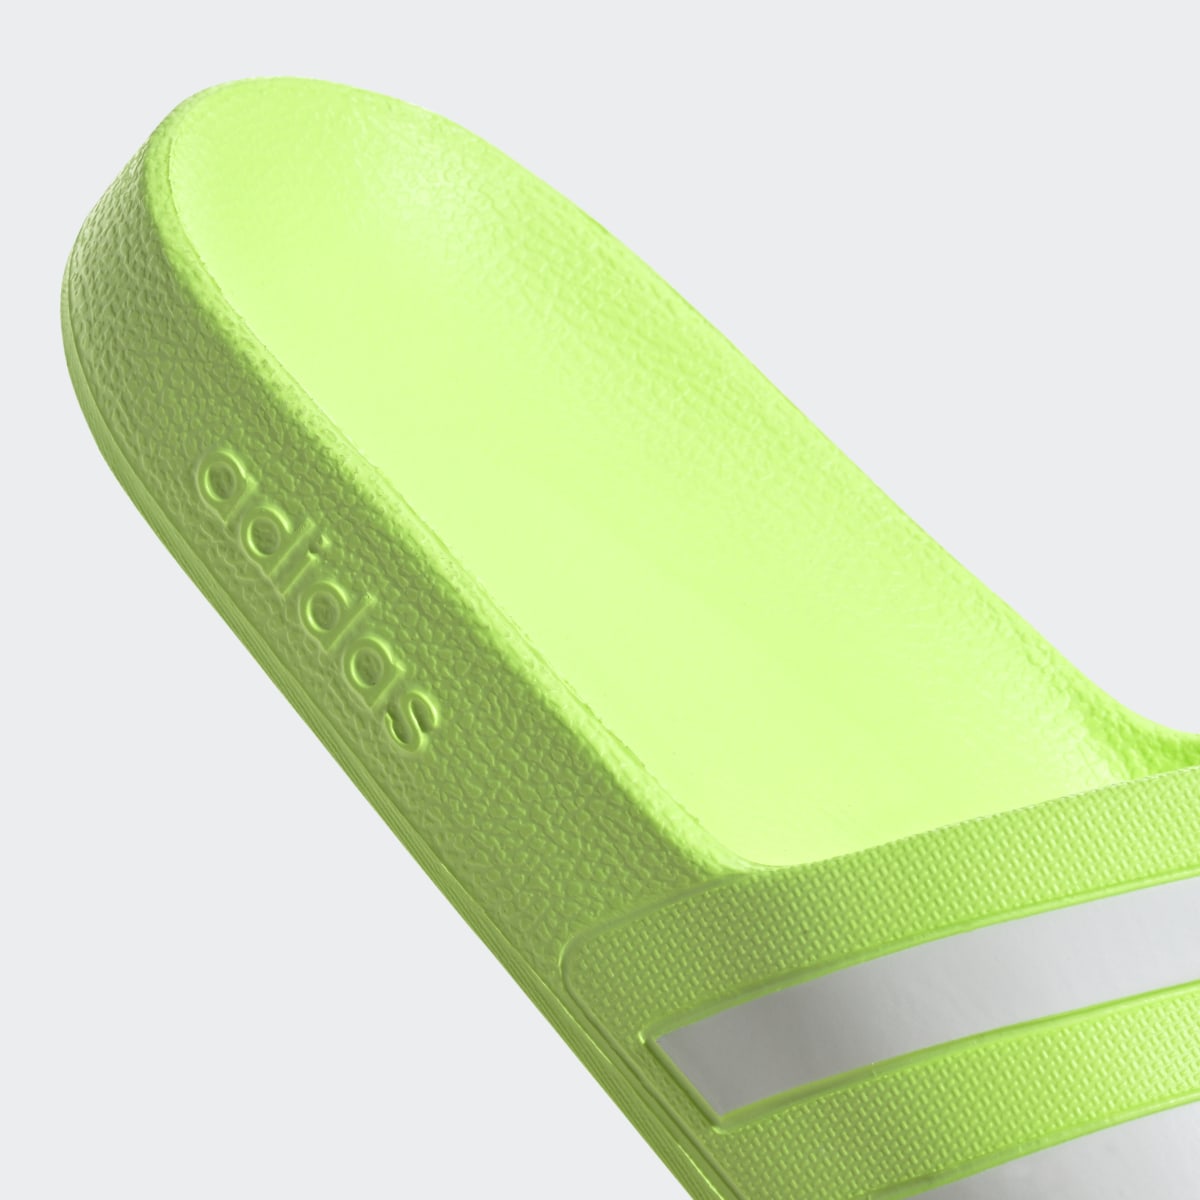 Adidas Aqua adilette. 10